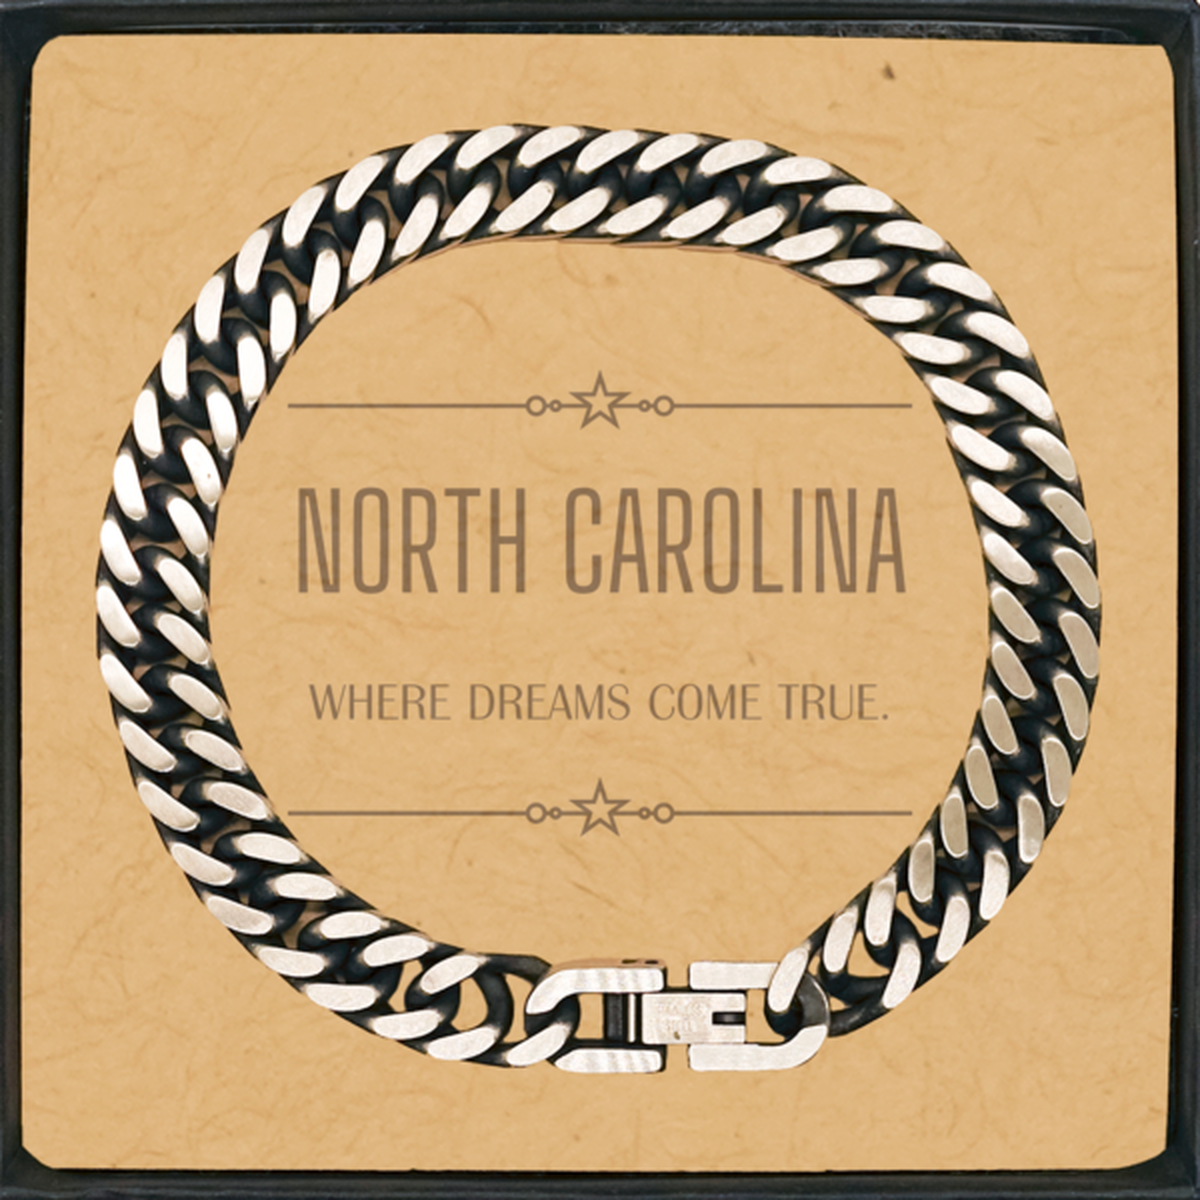 Love North Carolina State Cuban Link Chain Bracelet, North Carolina Where dreams come true, Birthday Inspirational Gifts For North Carolina Men, Women, Friends